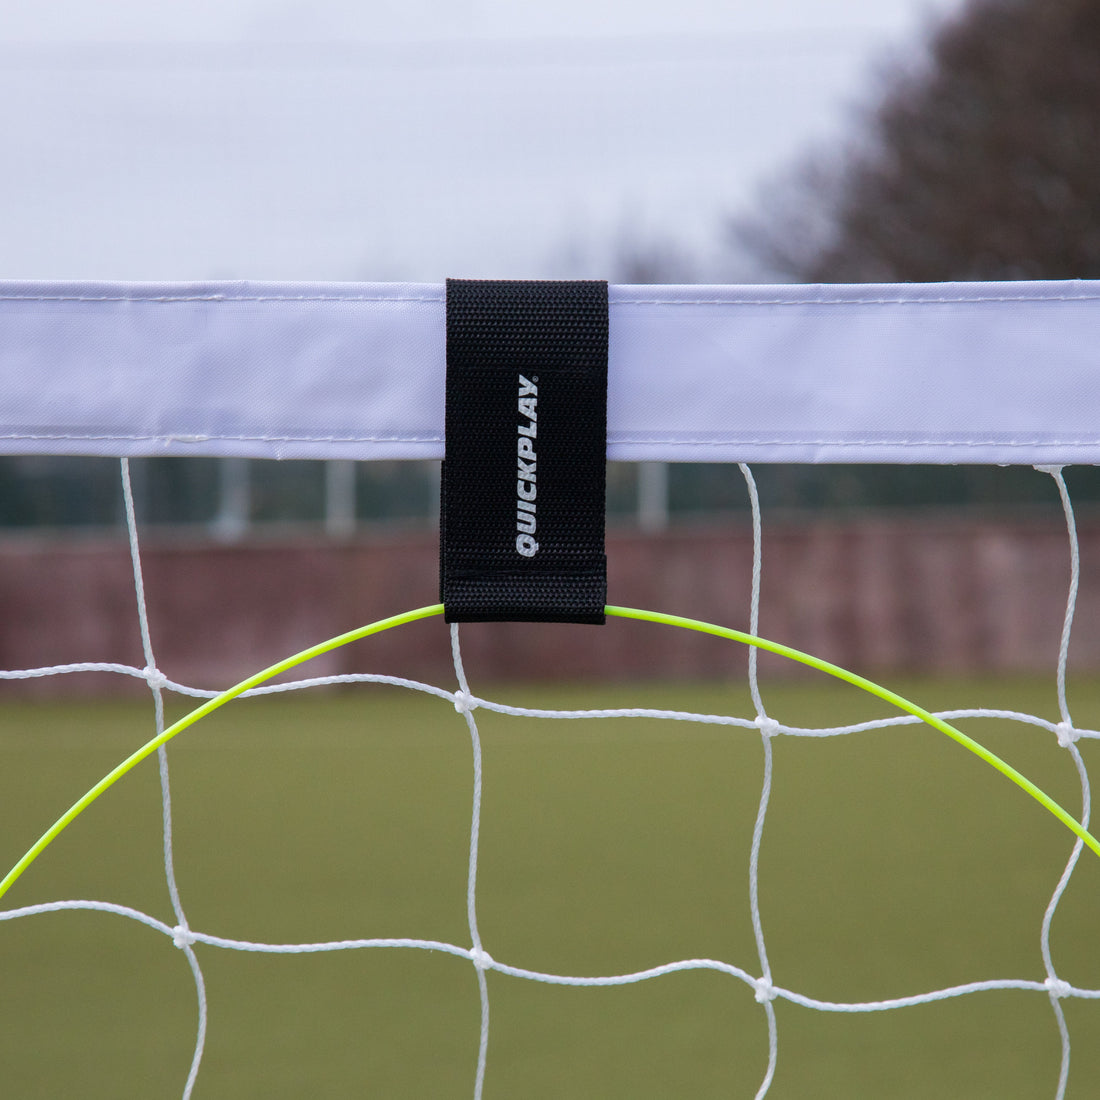 KICKSTER 18.5x6.6' Portable Soccer Goal U9 & U10